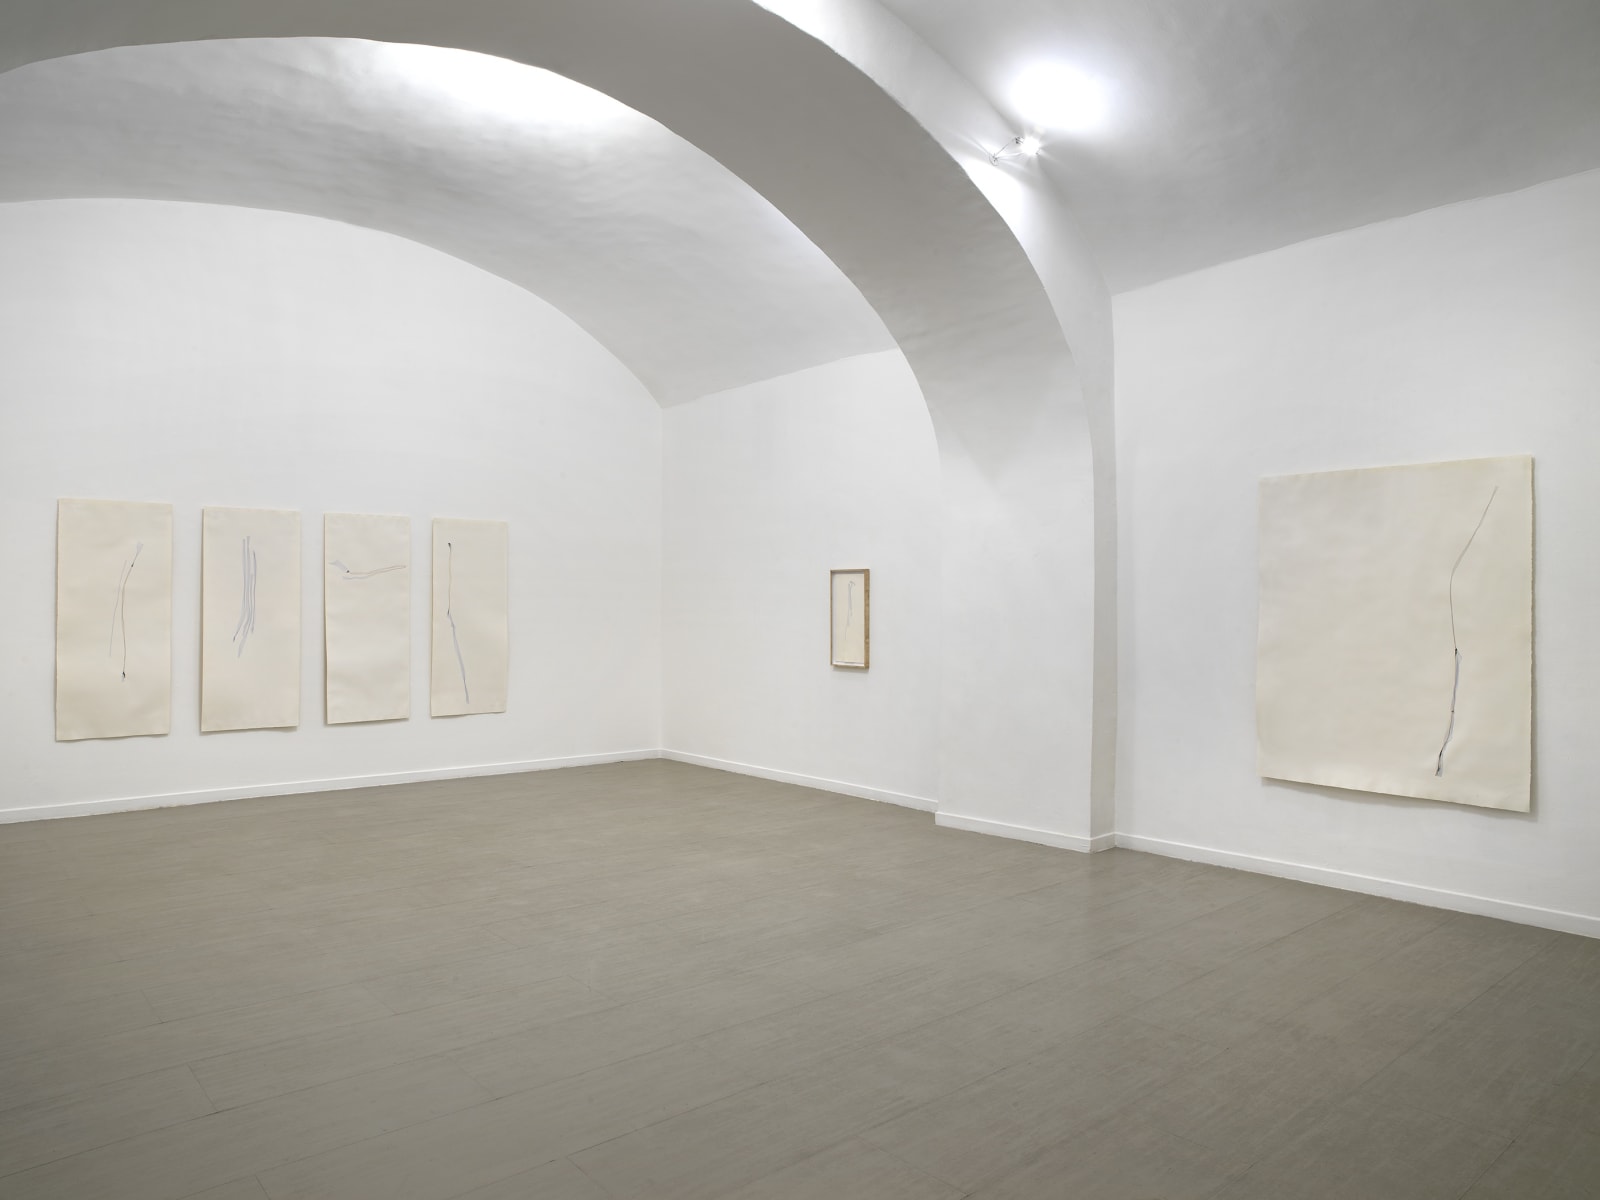 Beatrice Pediconi Nude curated by Cecilia Canziani installation view of the third room ph. Dario Lasagni